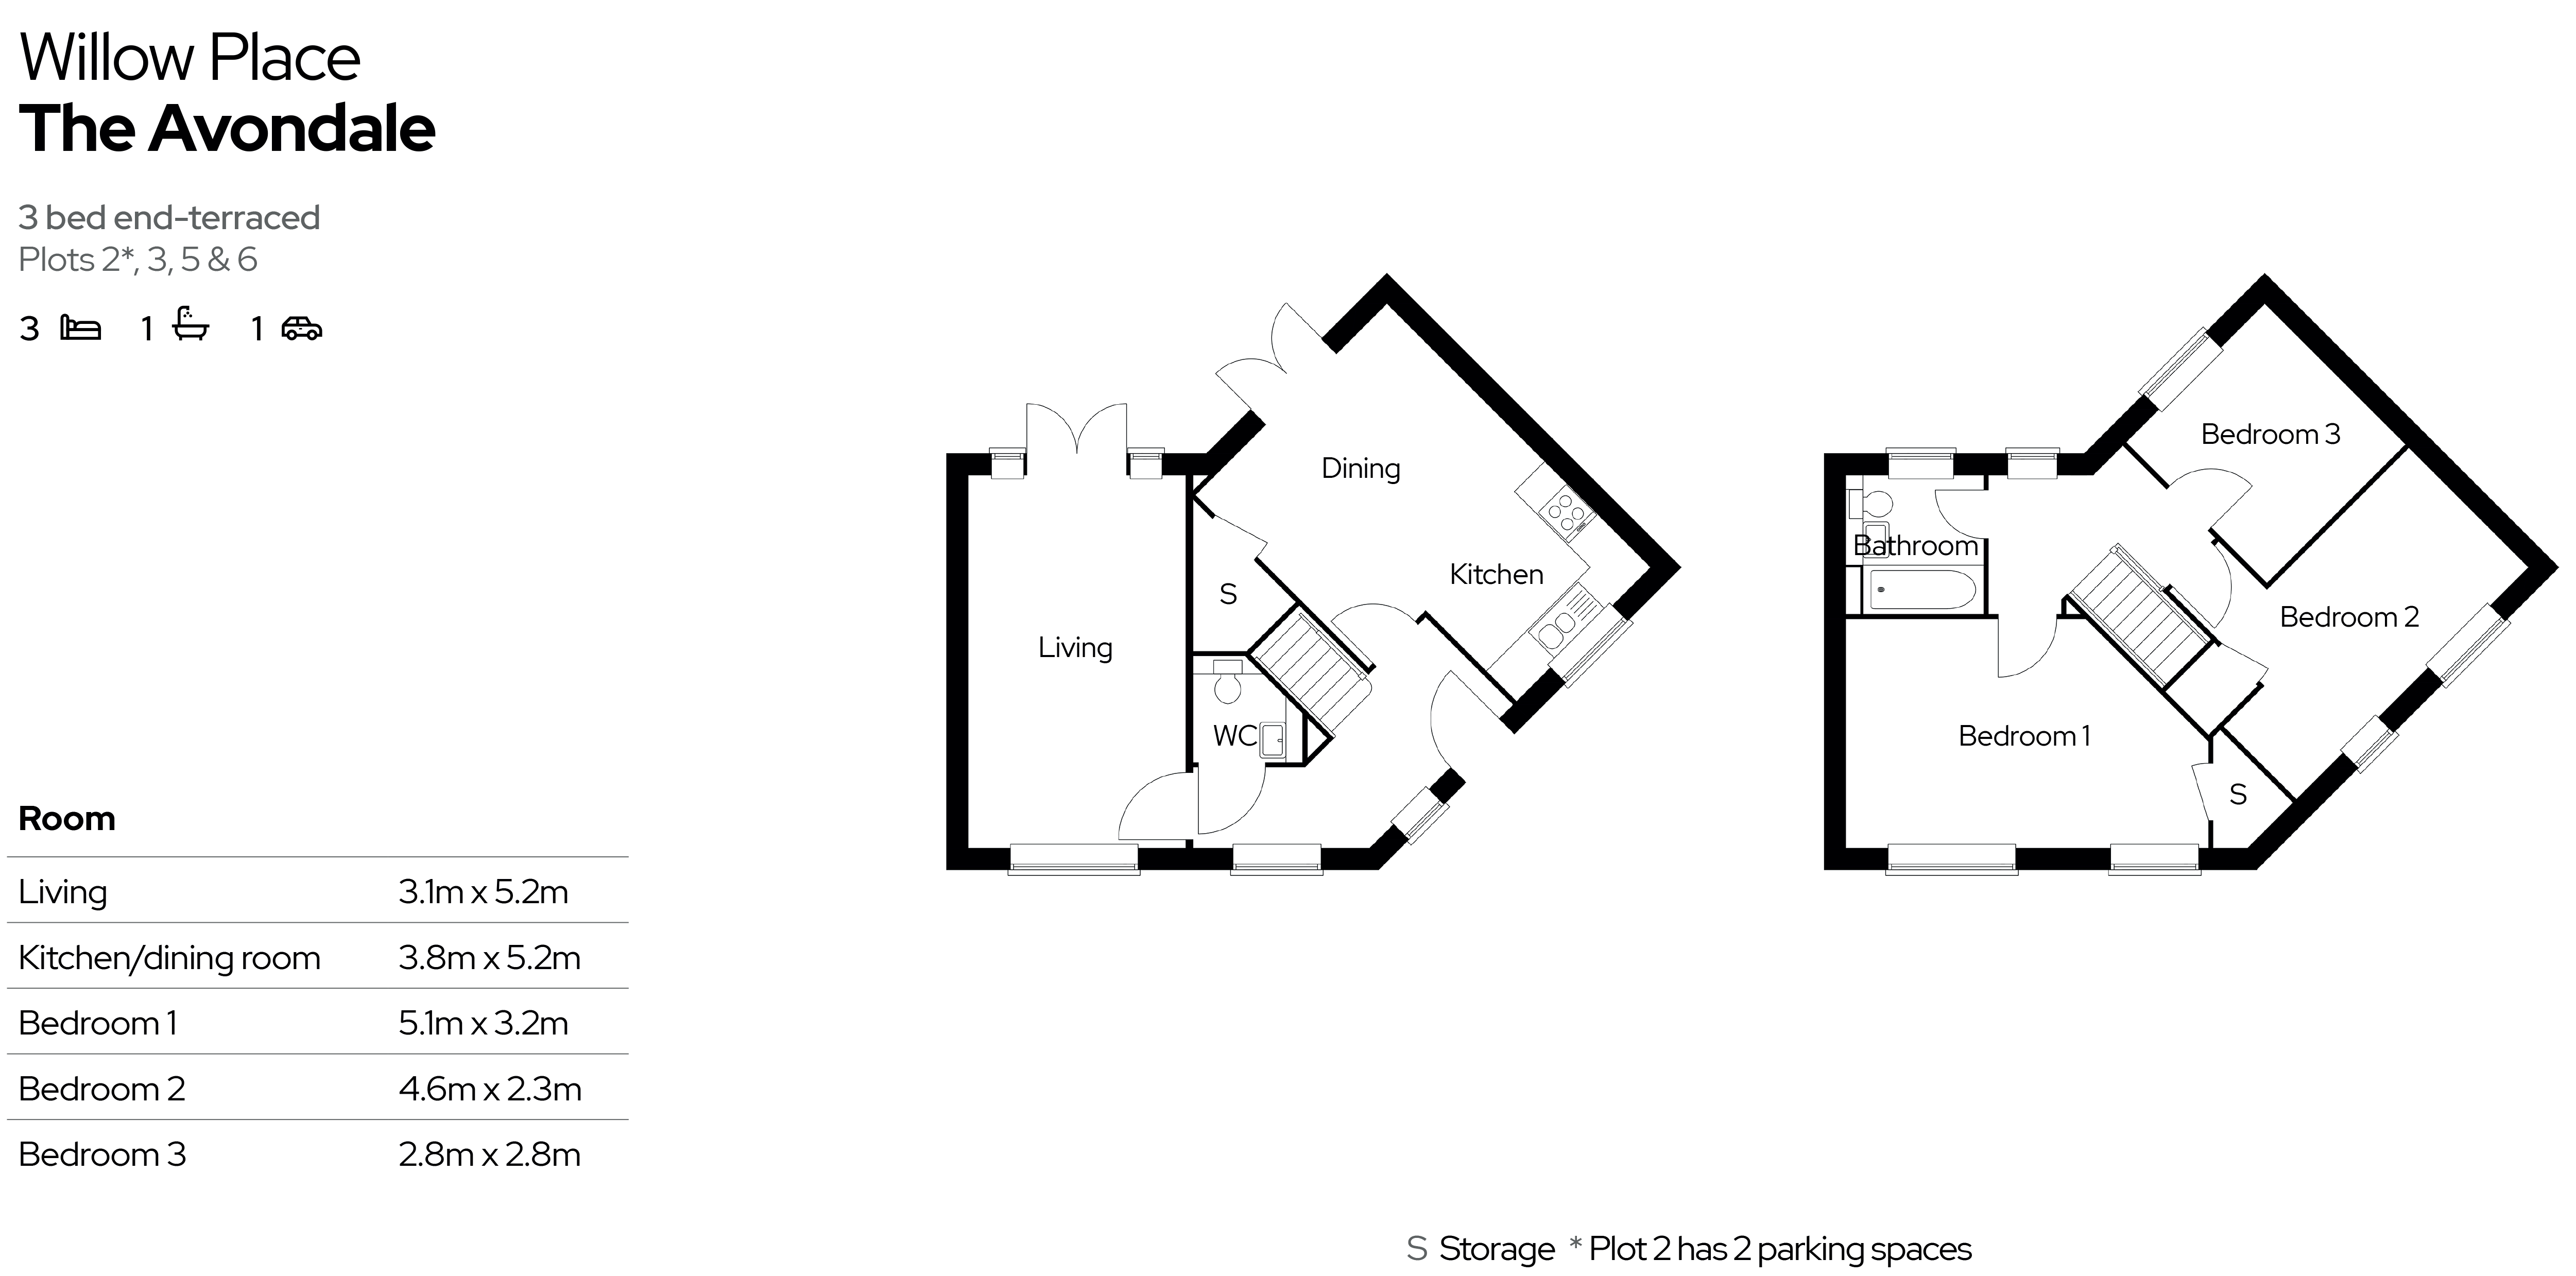 Plots 2,3,5 & 6 The Avondale (3 bed) floor plan